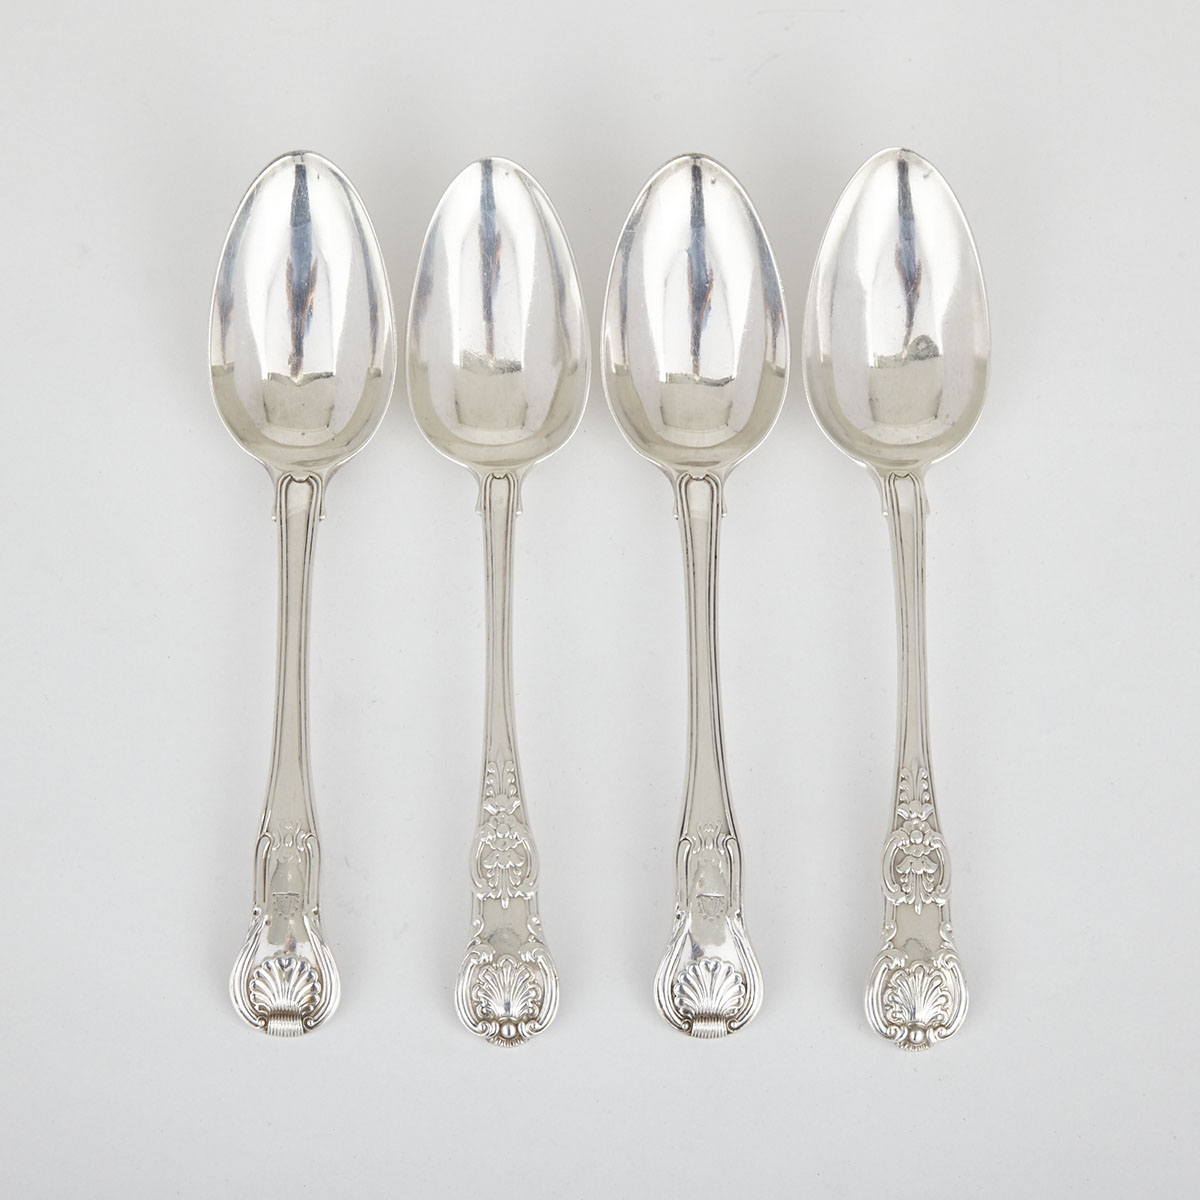 Pair of George III Silver Hourglass Pattern Table Spoons, Josiah & George Piercy, London, 1816 and Pair of George IV Queens Pattern Table Spoons, William Chawner II, 1822/23